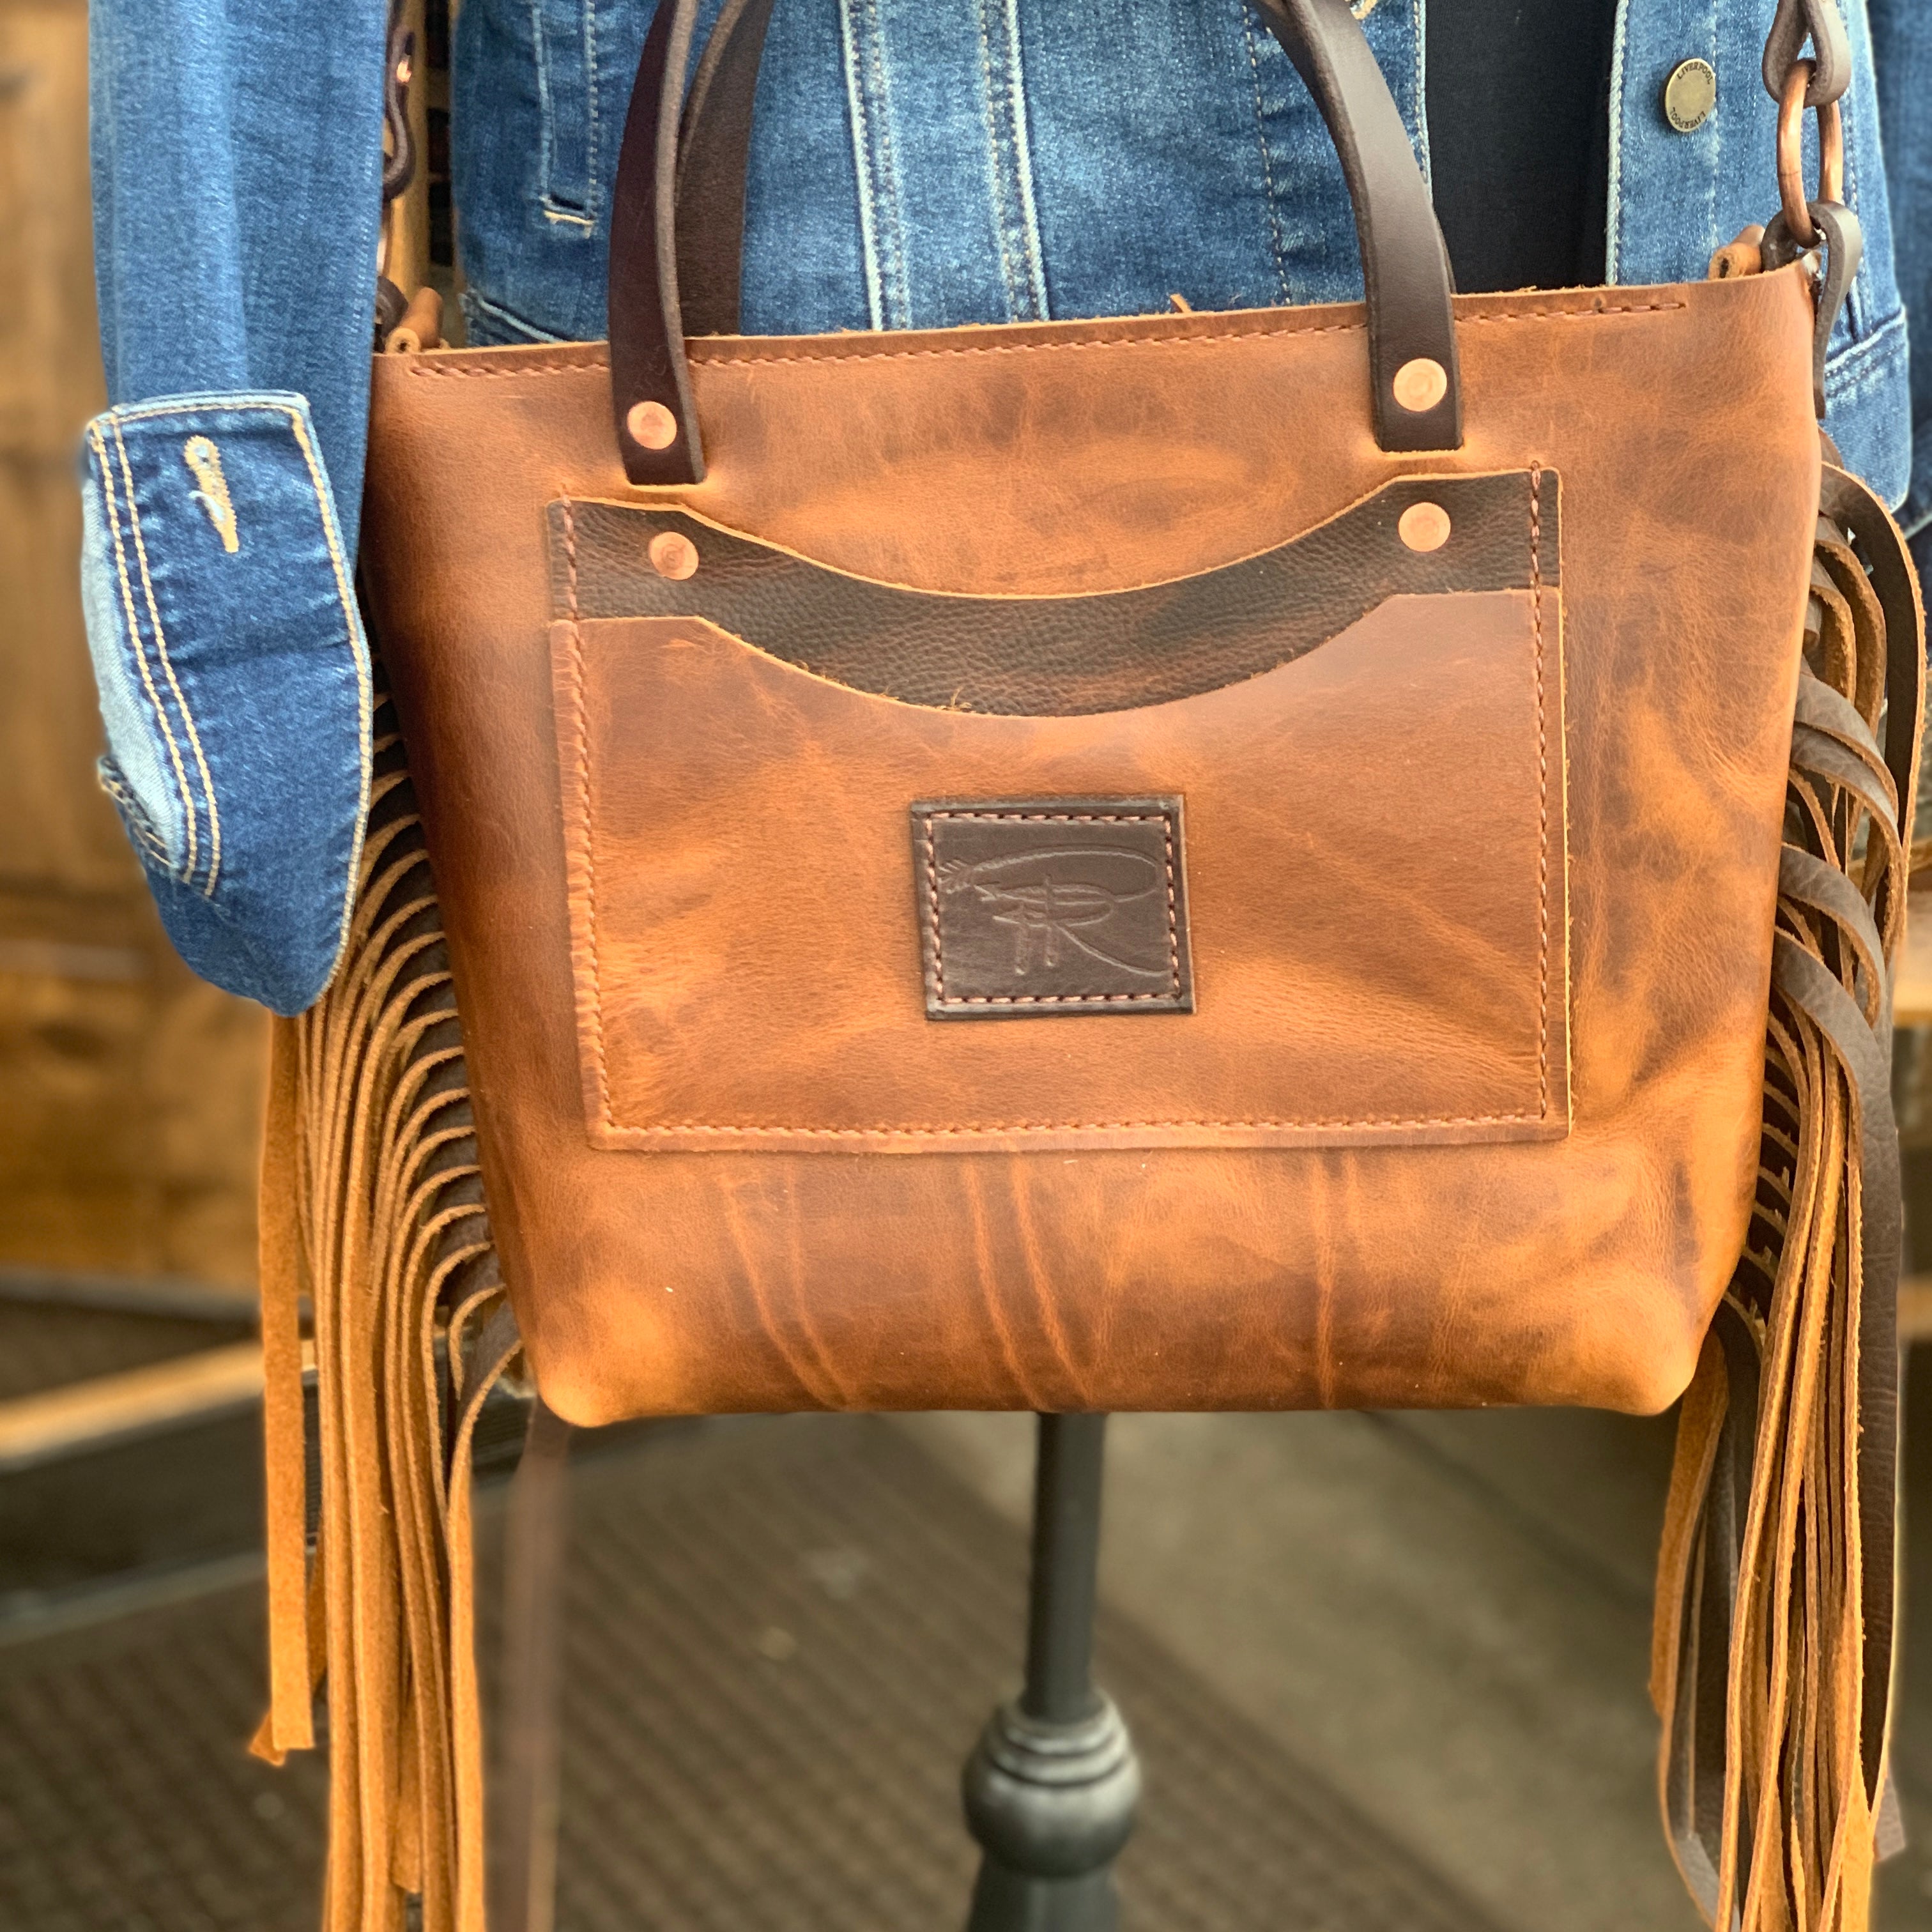 fringe purse handbag cowgirl fashion leather goods maker handcrafted shopping western lifestyle north idaho